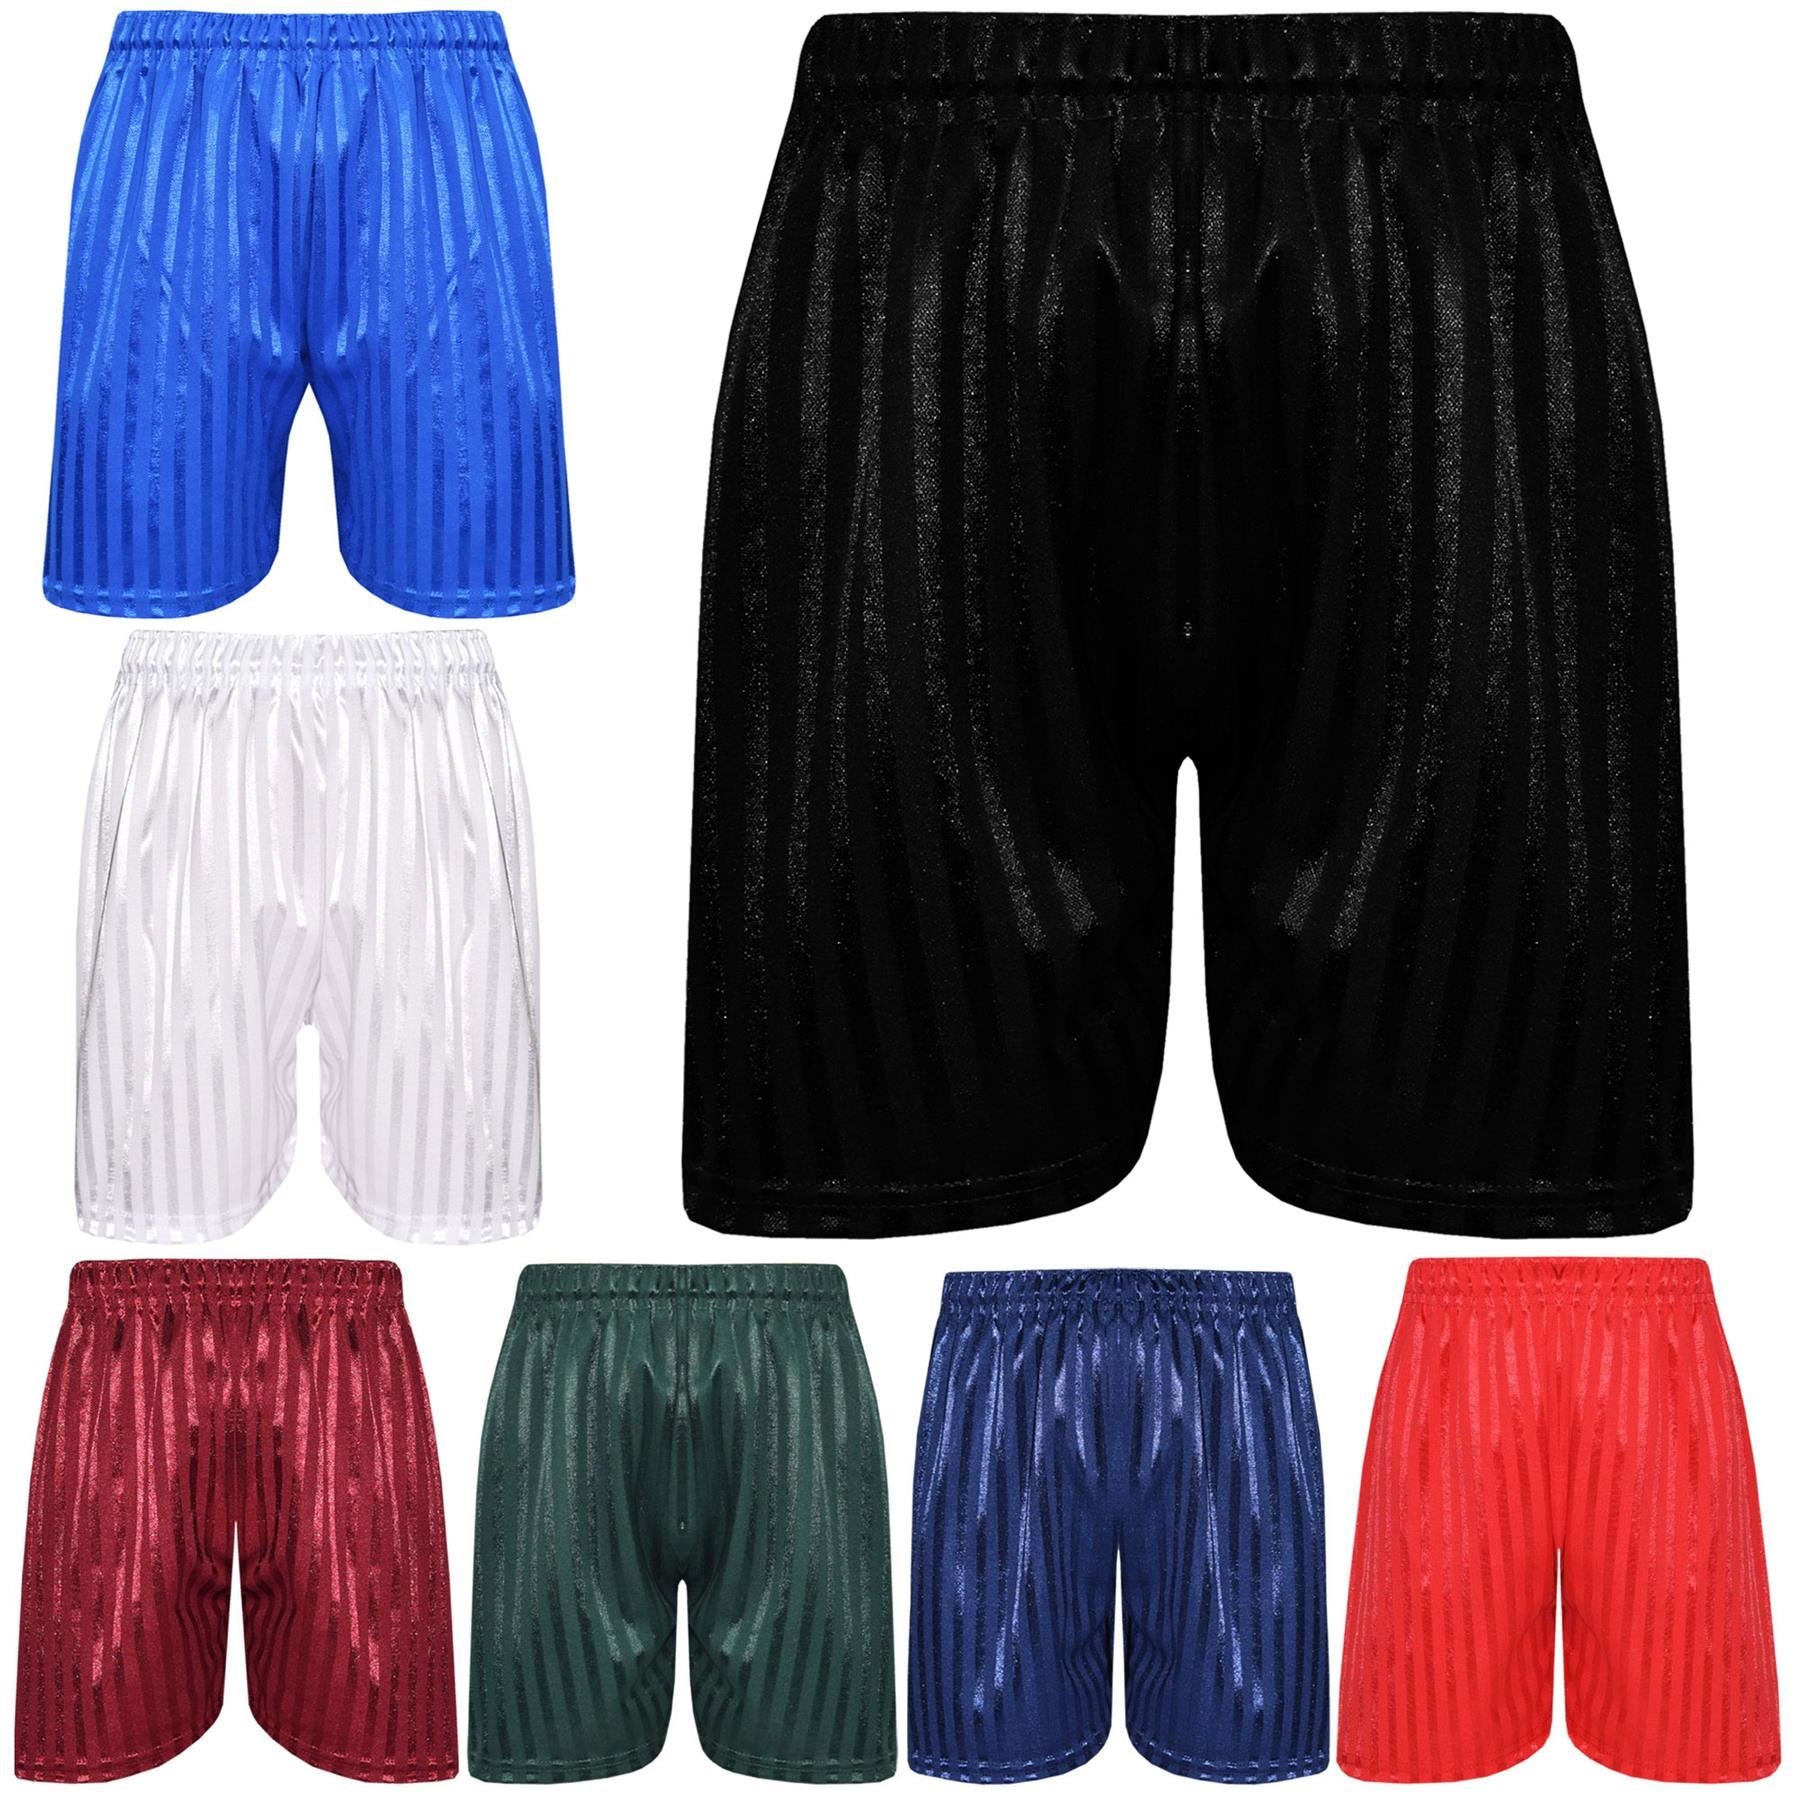 Kids Girls Boys Shadow Stripe PE Shorts Sports Pack Of 2 Gym School Shorts 2-13